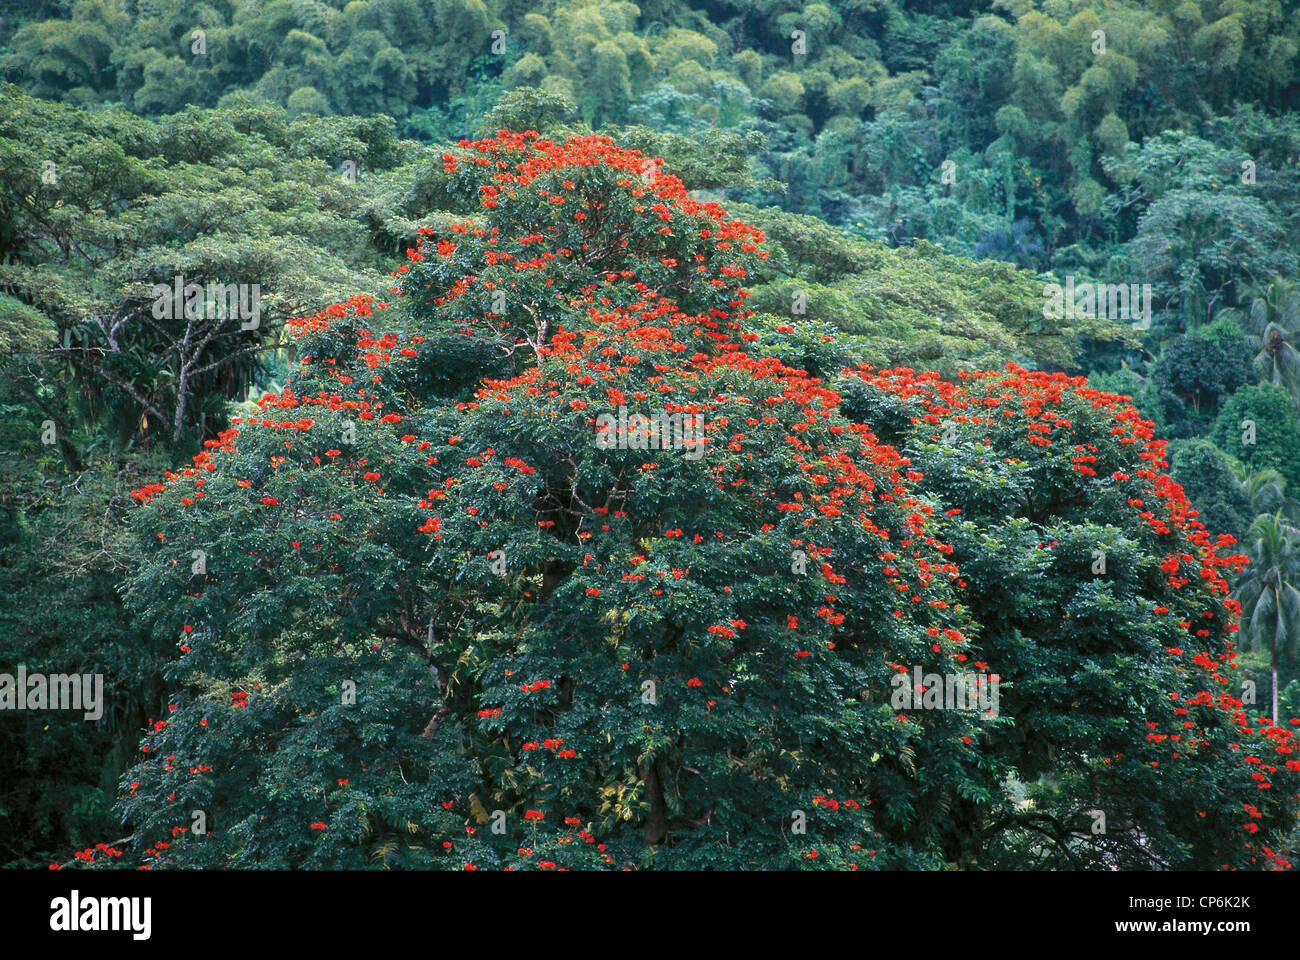 Jamaica - A plant Erythrina Stock Photo